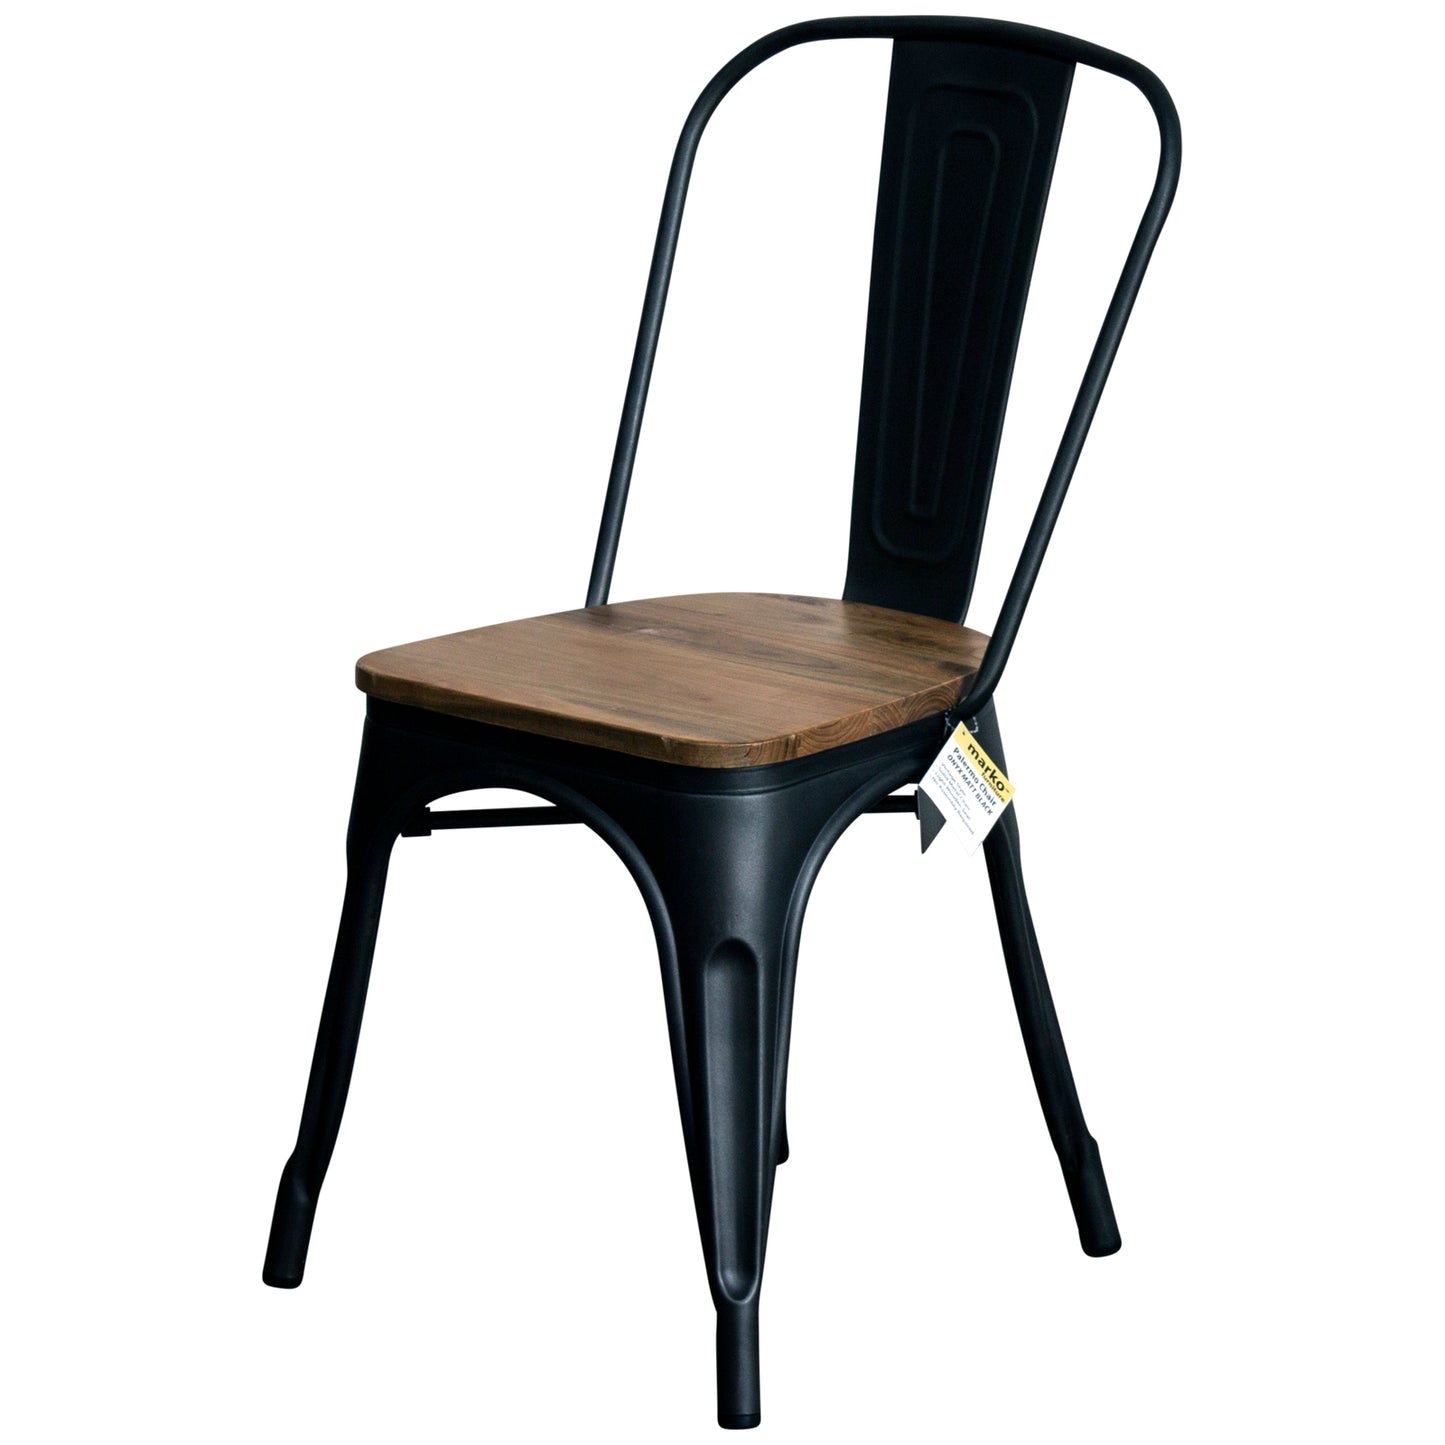 5PC Enna Table Florence & Palermo Chairs Set - Onyx Matt Black